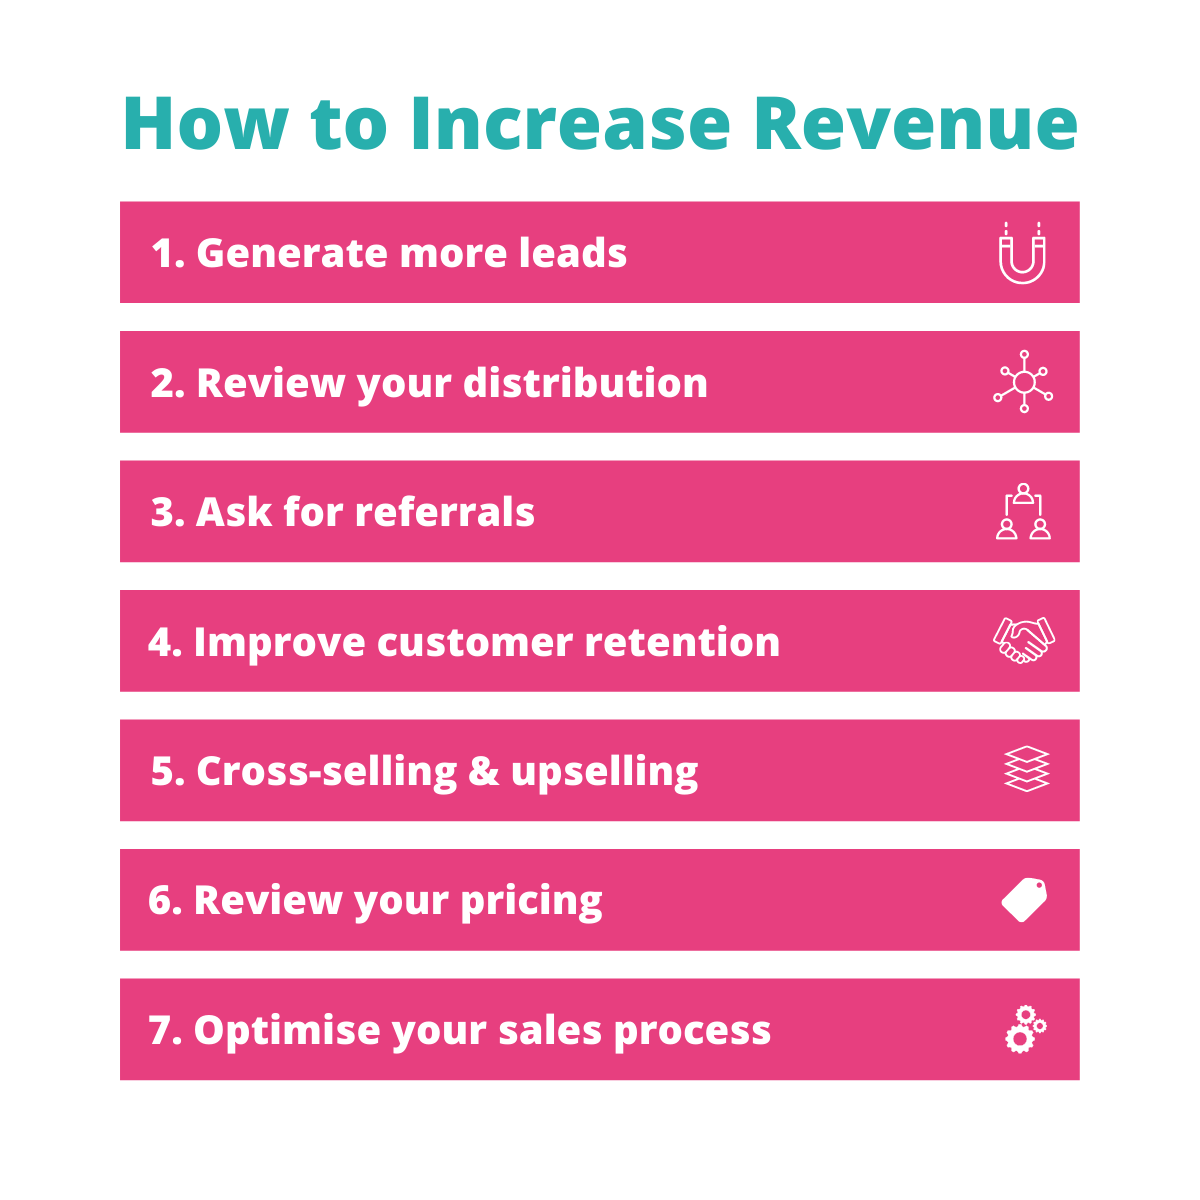 Increase revenue